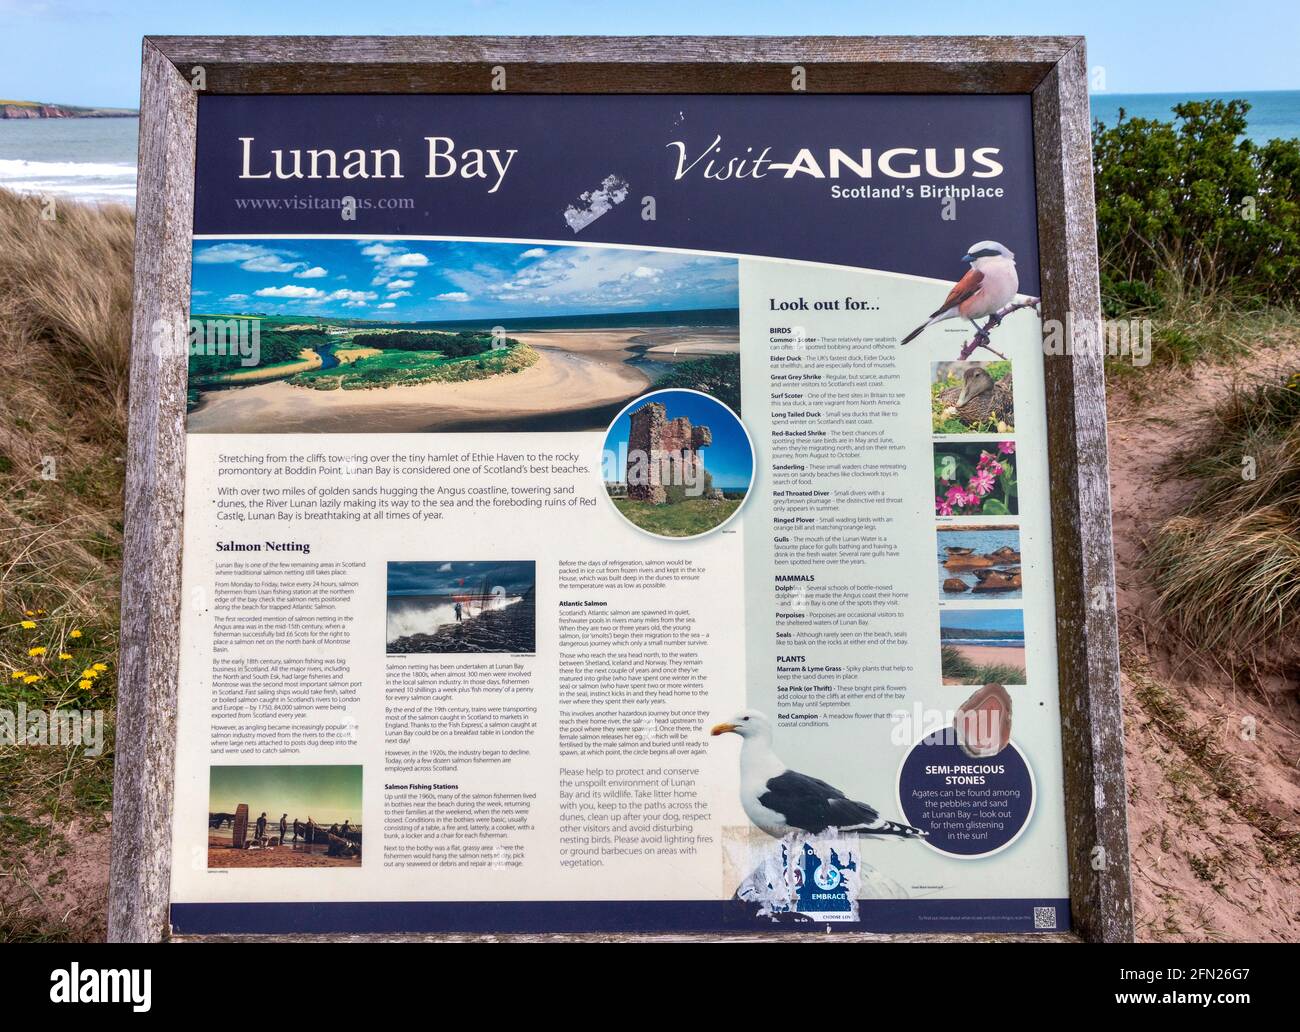 LUNAN BAY AND BEACH ANGUS SCOTLAND VISITOR INFORMATION SIGN NEAR THE BEACH Stock Photo